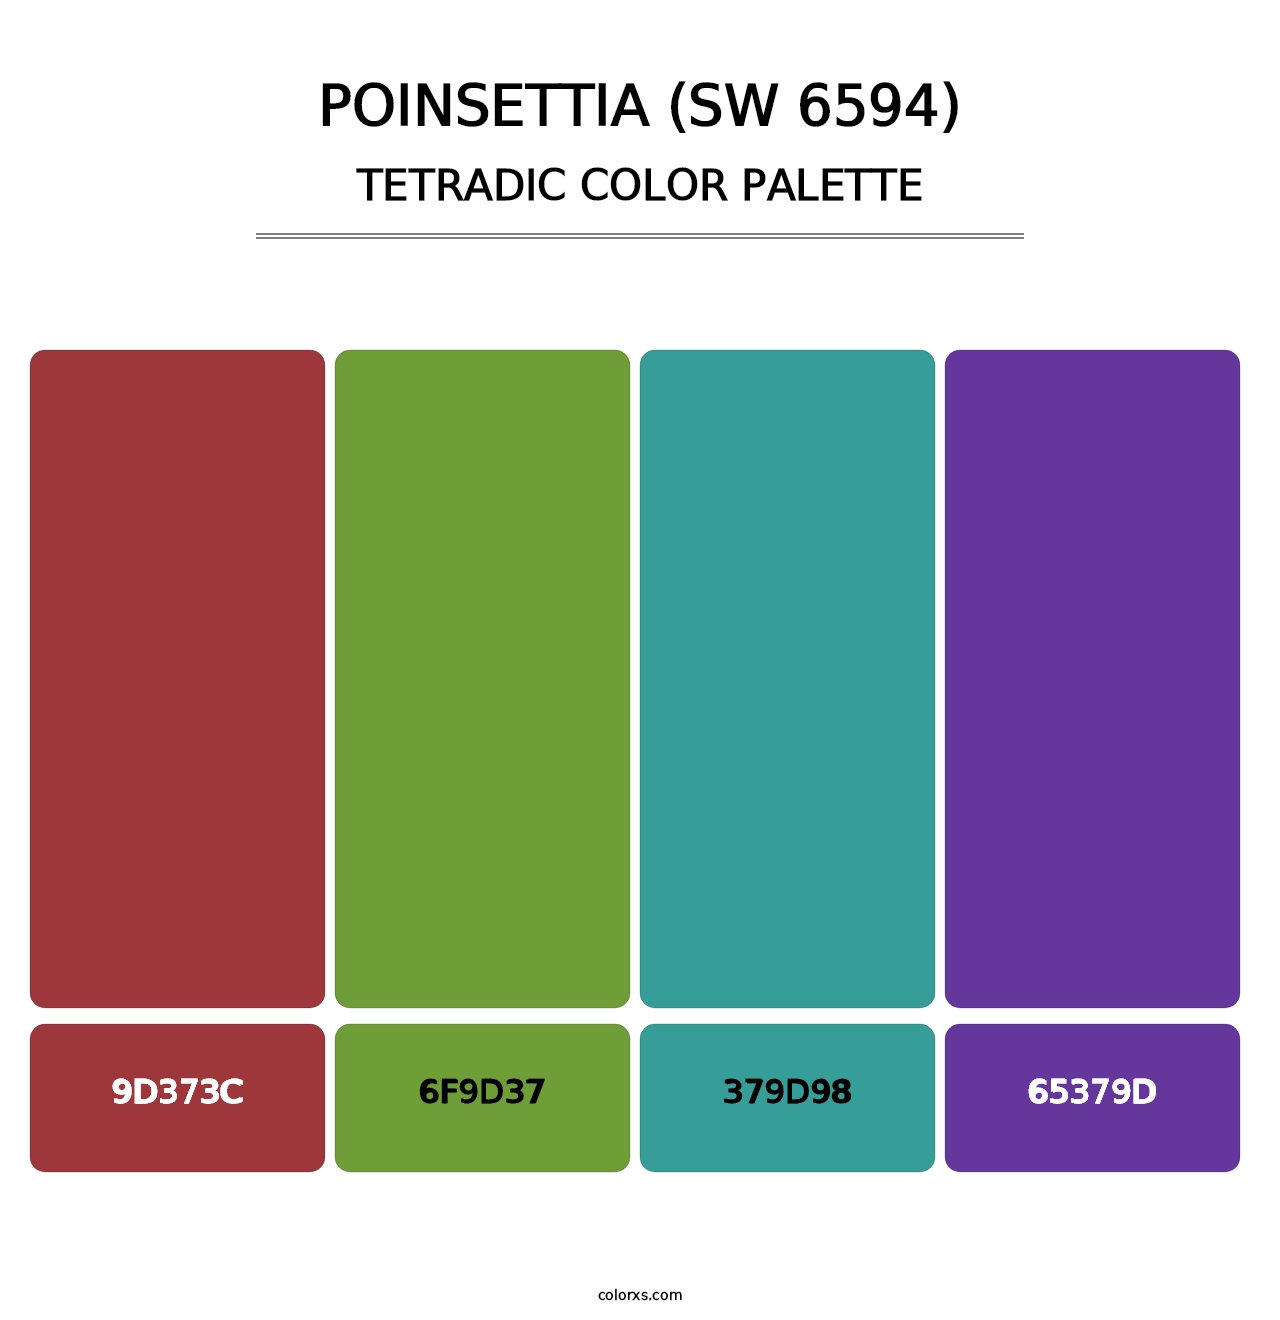 Poinsettia (SW 6594) - Tetradic Color Palette